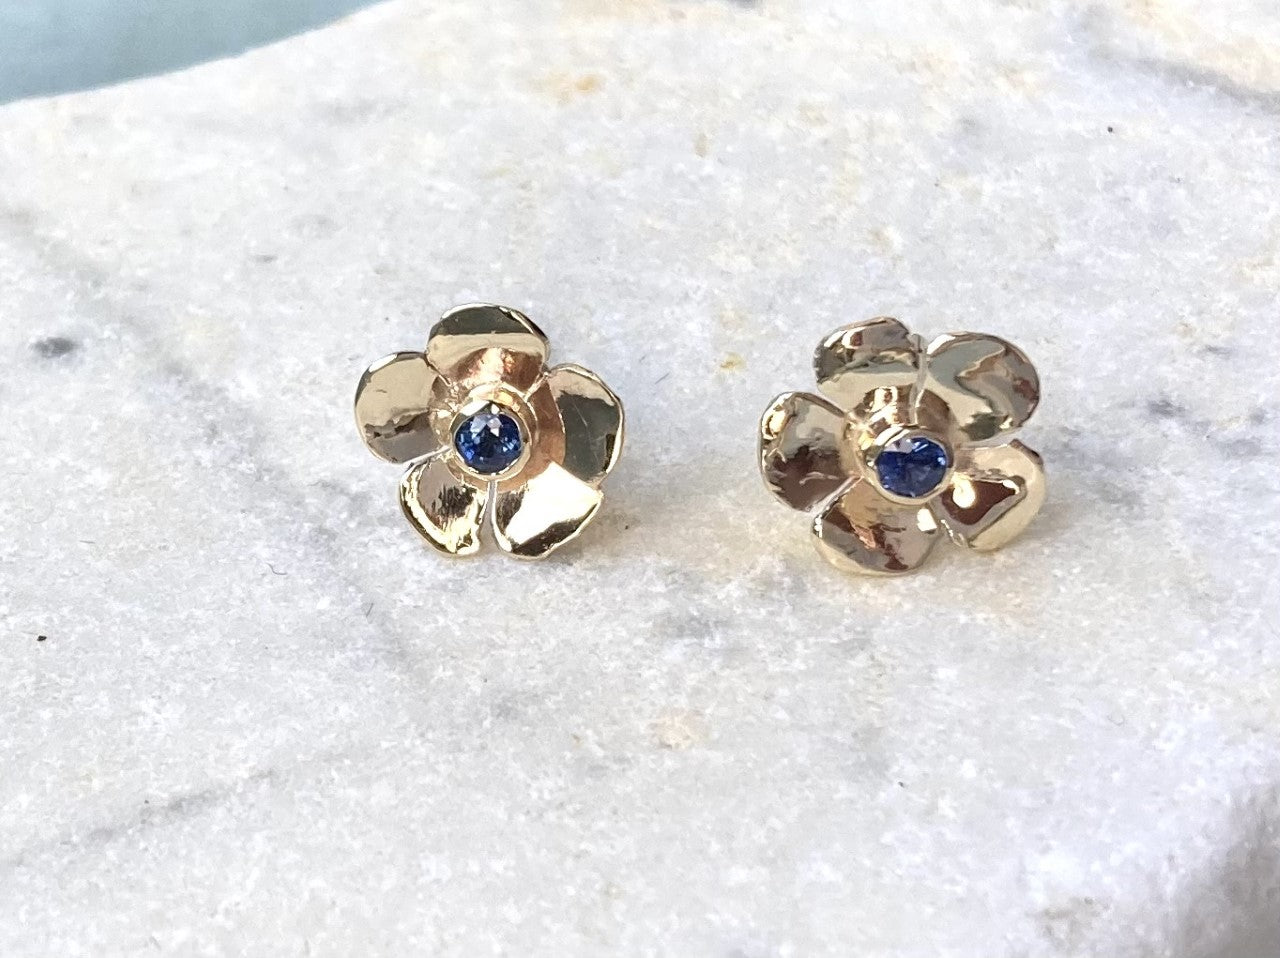 Gold rose flower stud earrings set with beautiful cornflower blue sapphires